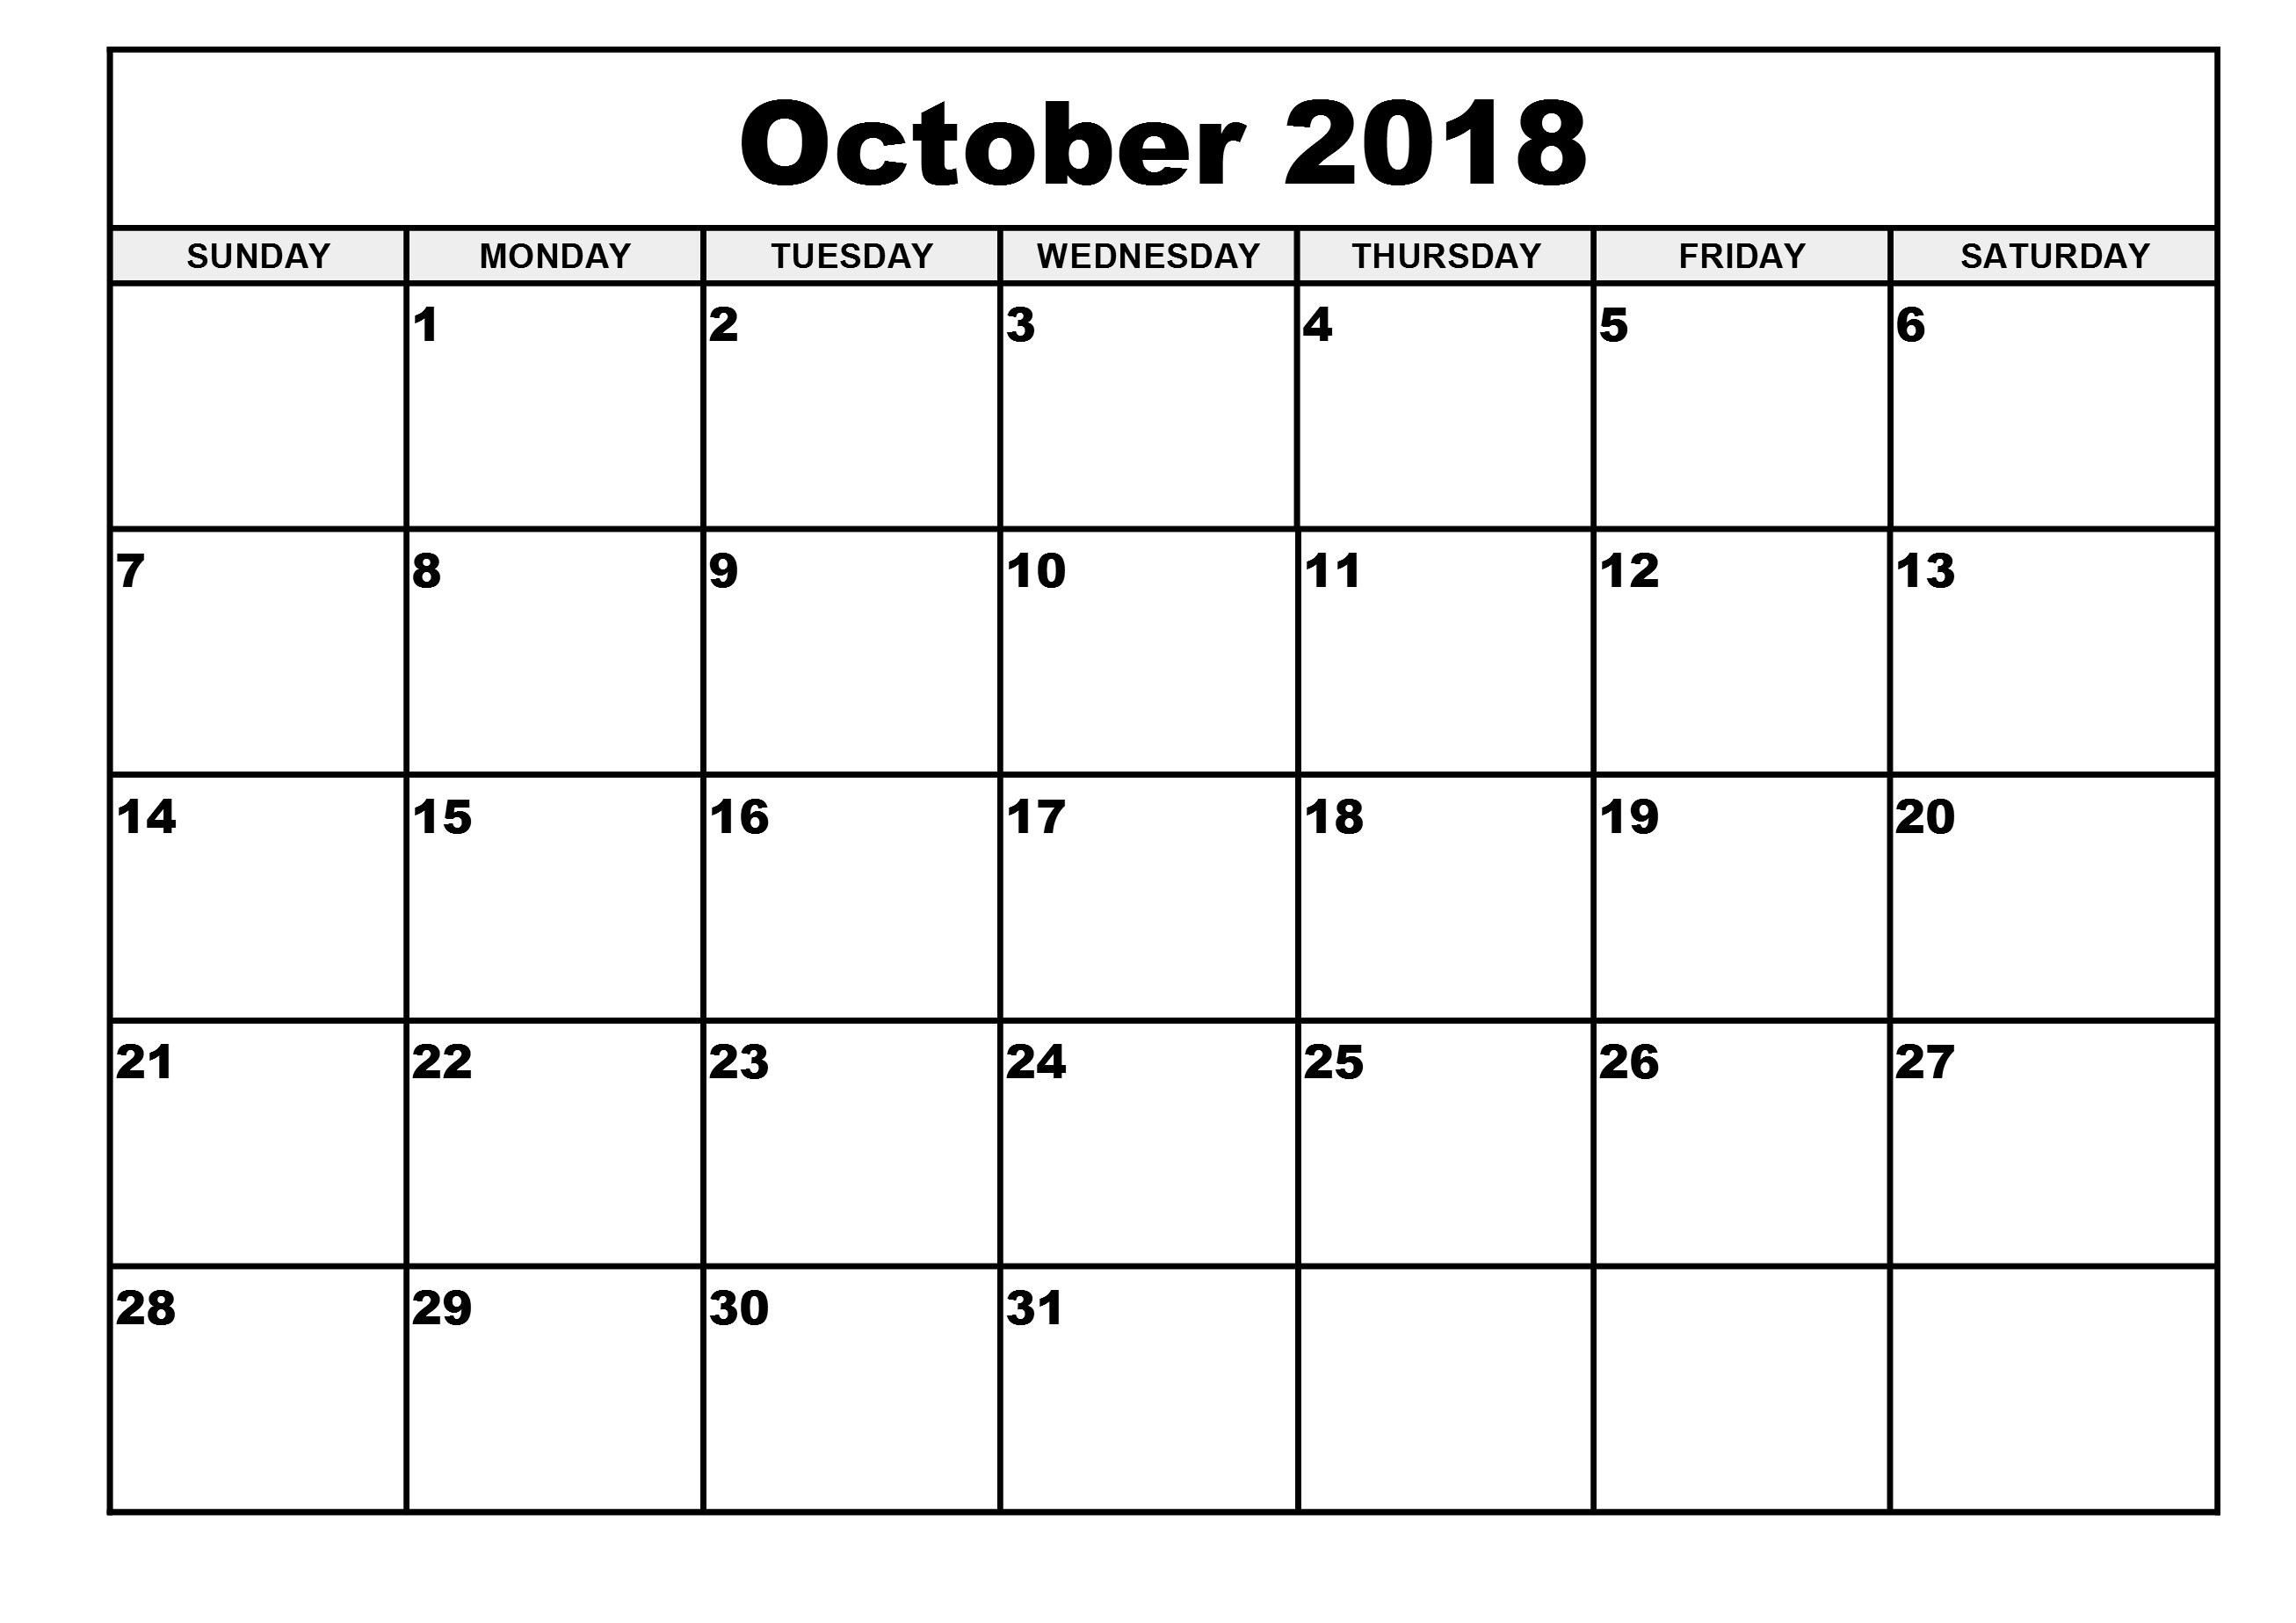 October 2018 Editable Calendar | Workout | October Calendar, Free Calendar Month Of October